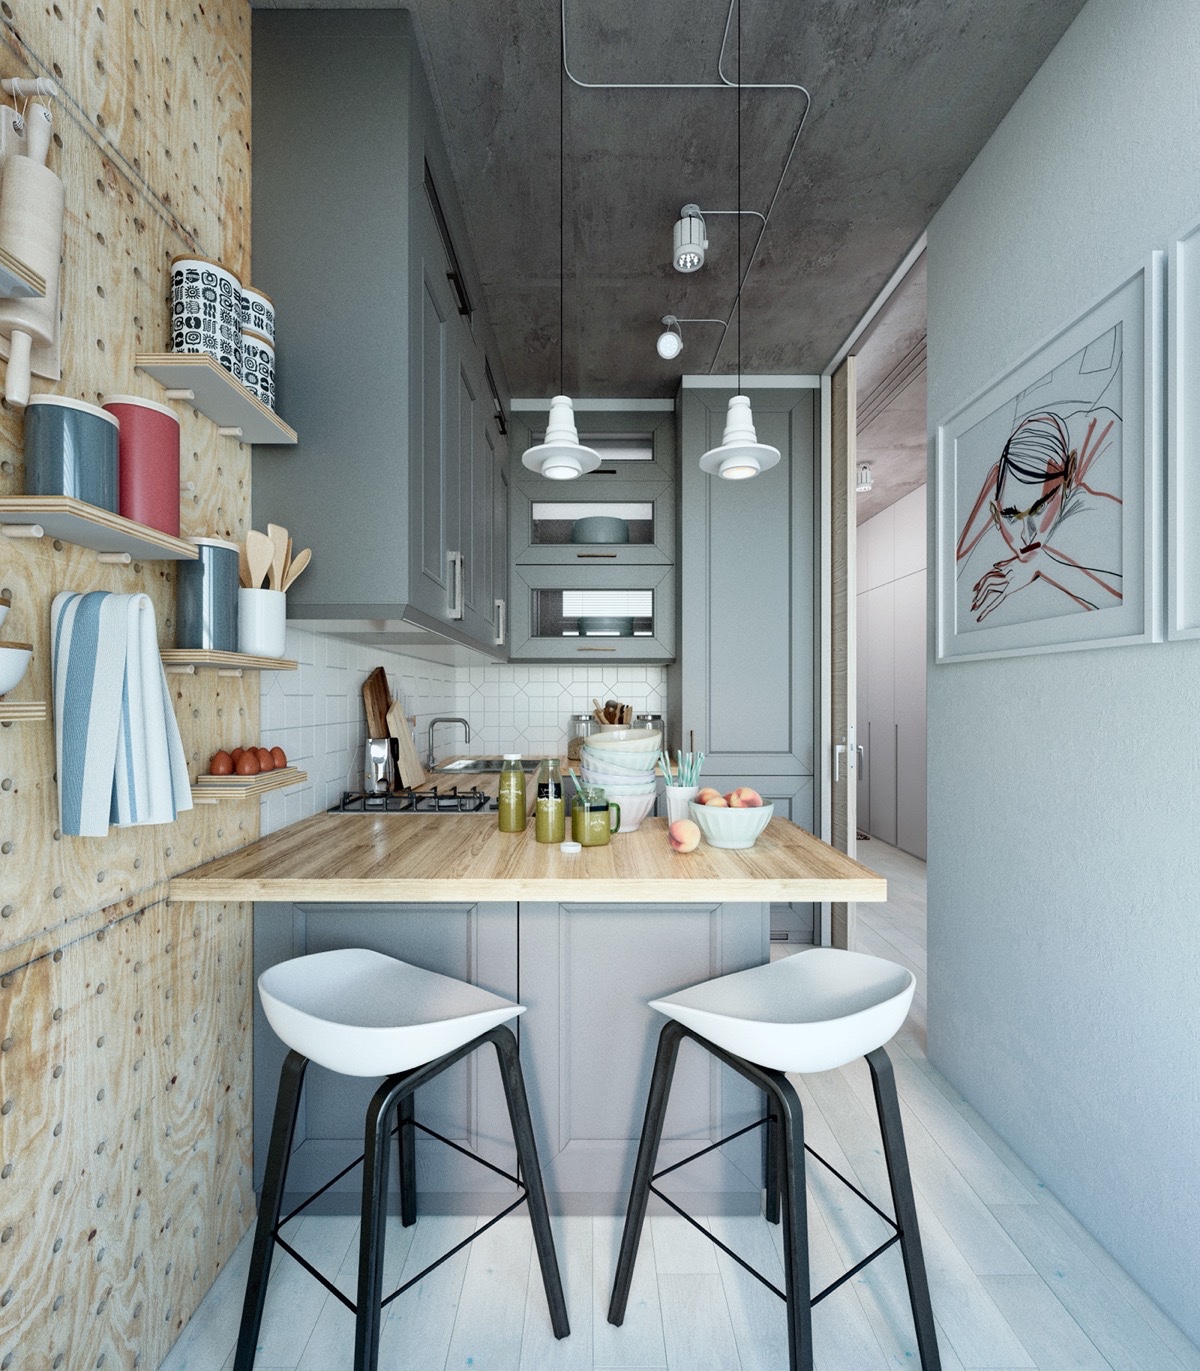 compact-kitchen-countertop-ideas.jpg